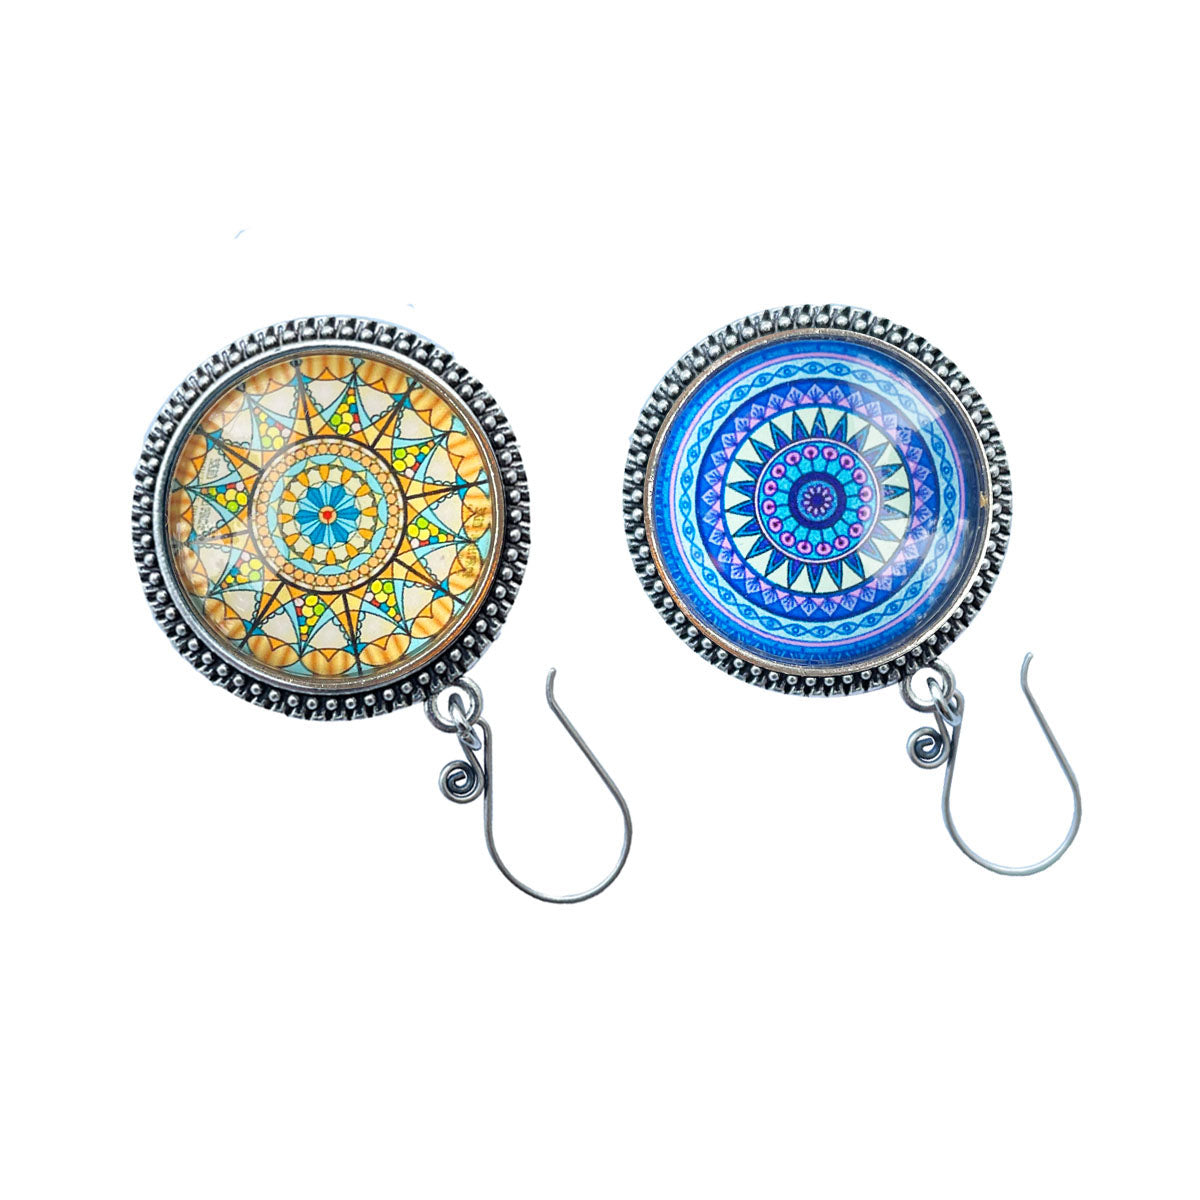 lovielf 925 Silver Portuguese Knitting Pin for Knitters with Teal Bohemian Mandala Van Gogh Design- Magnetic | 2 pcs (Mandala 2)